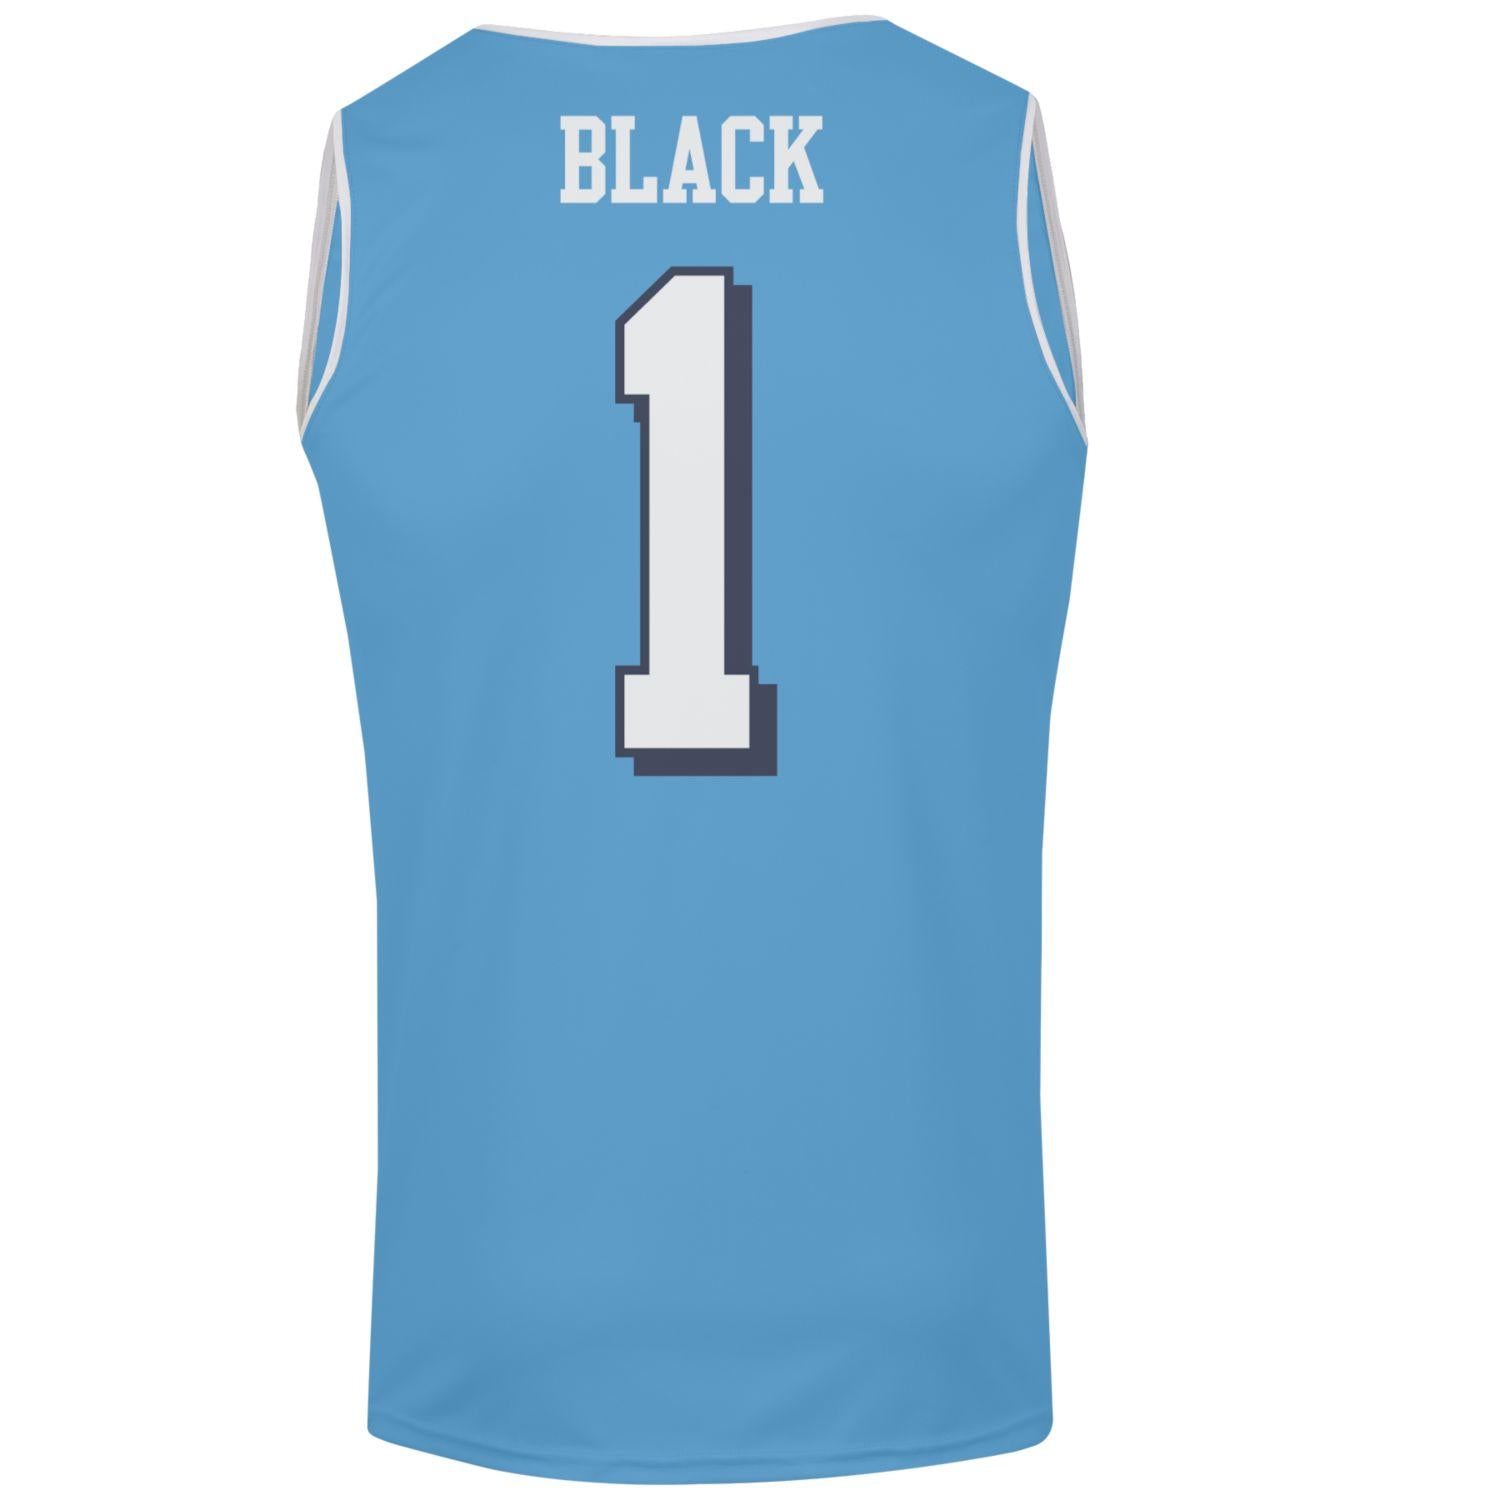 Leaky Black #1 Jersey